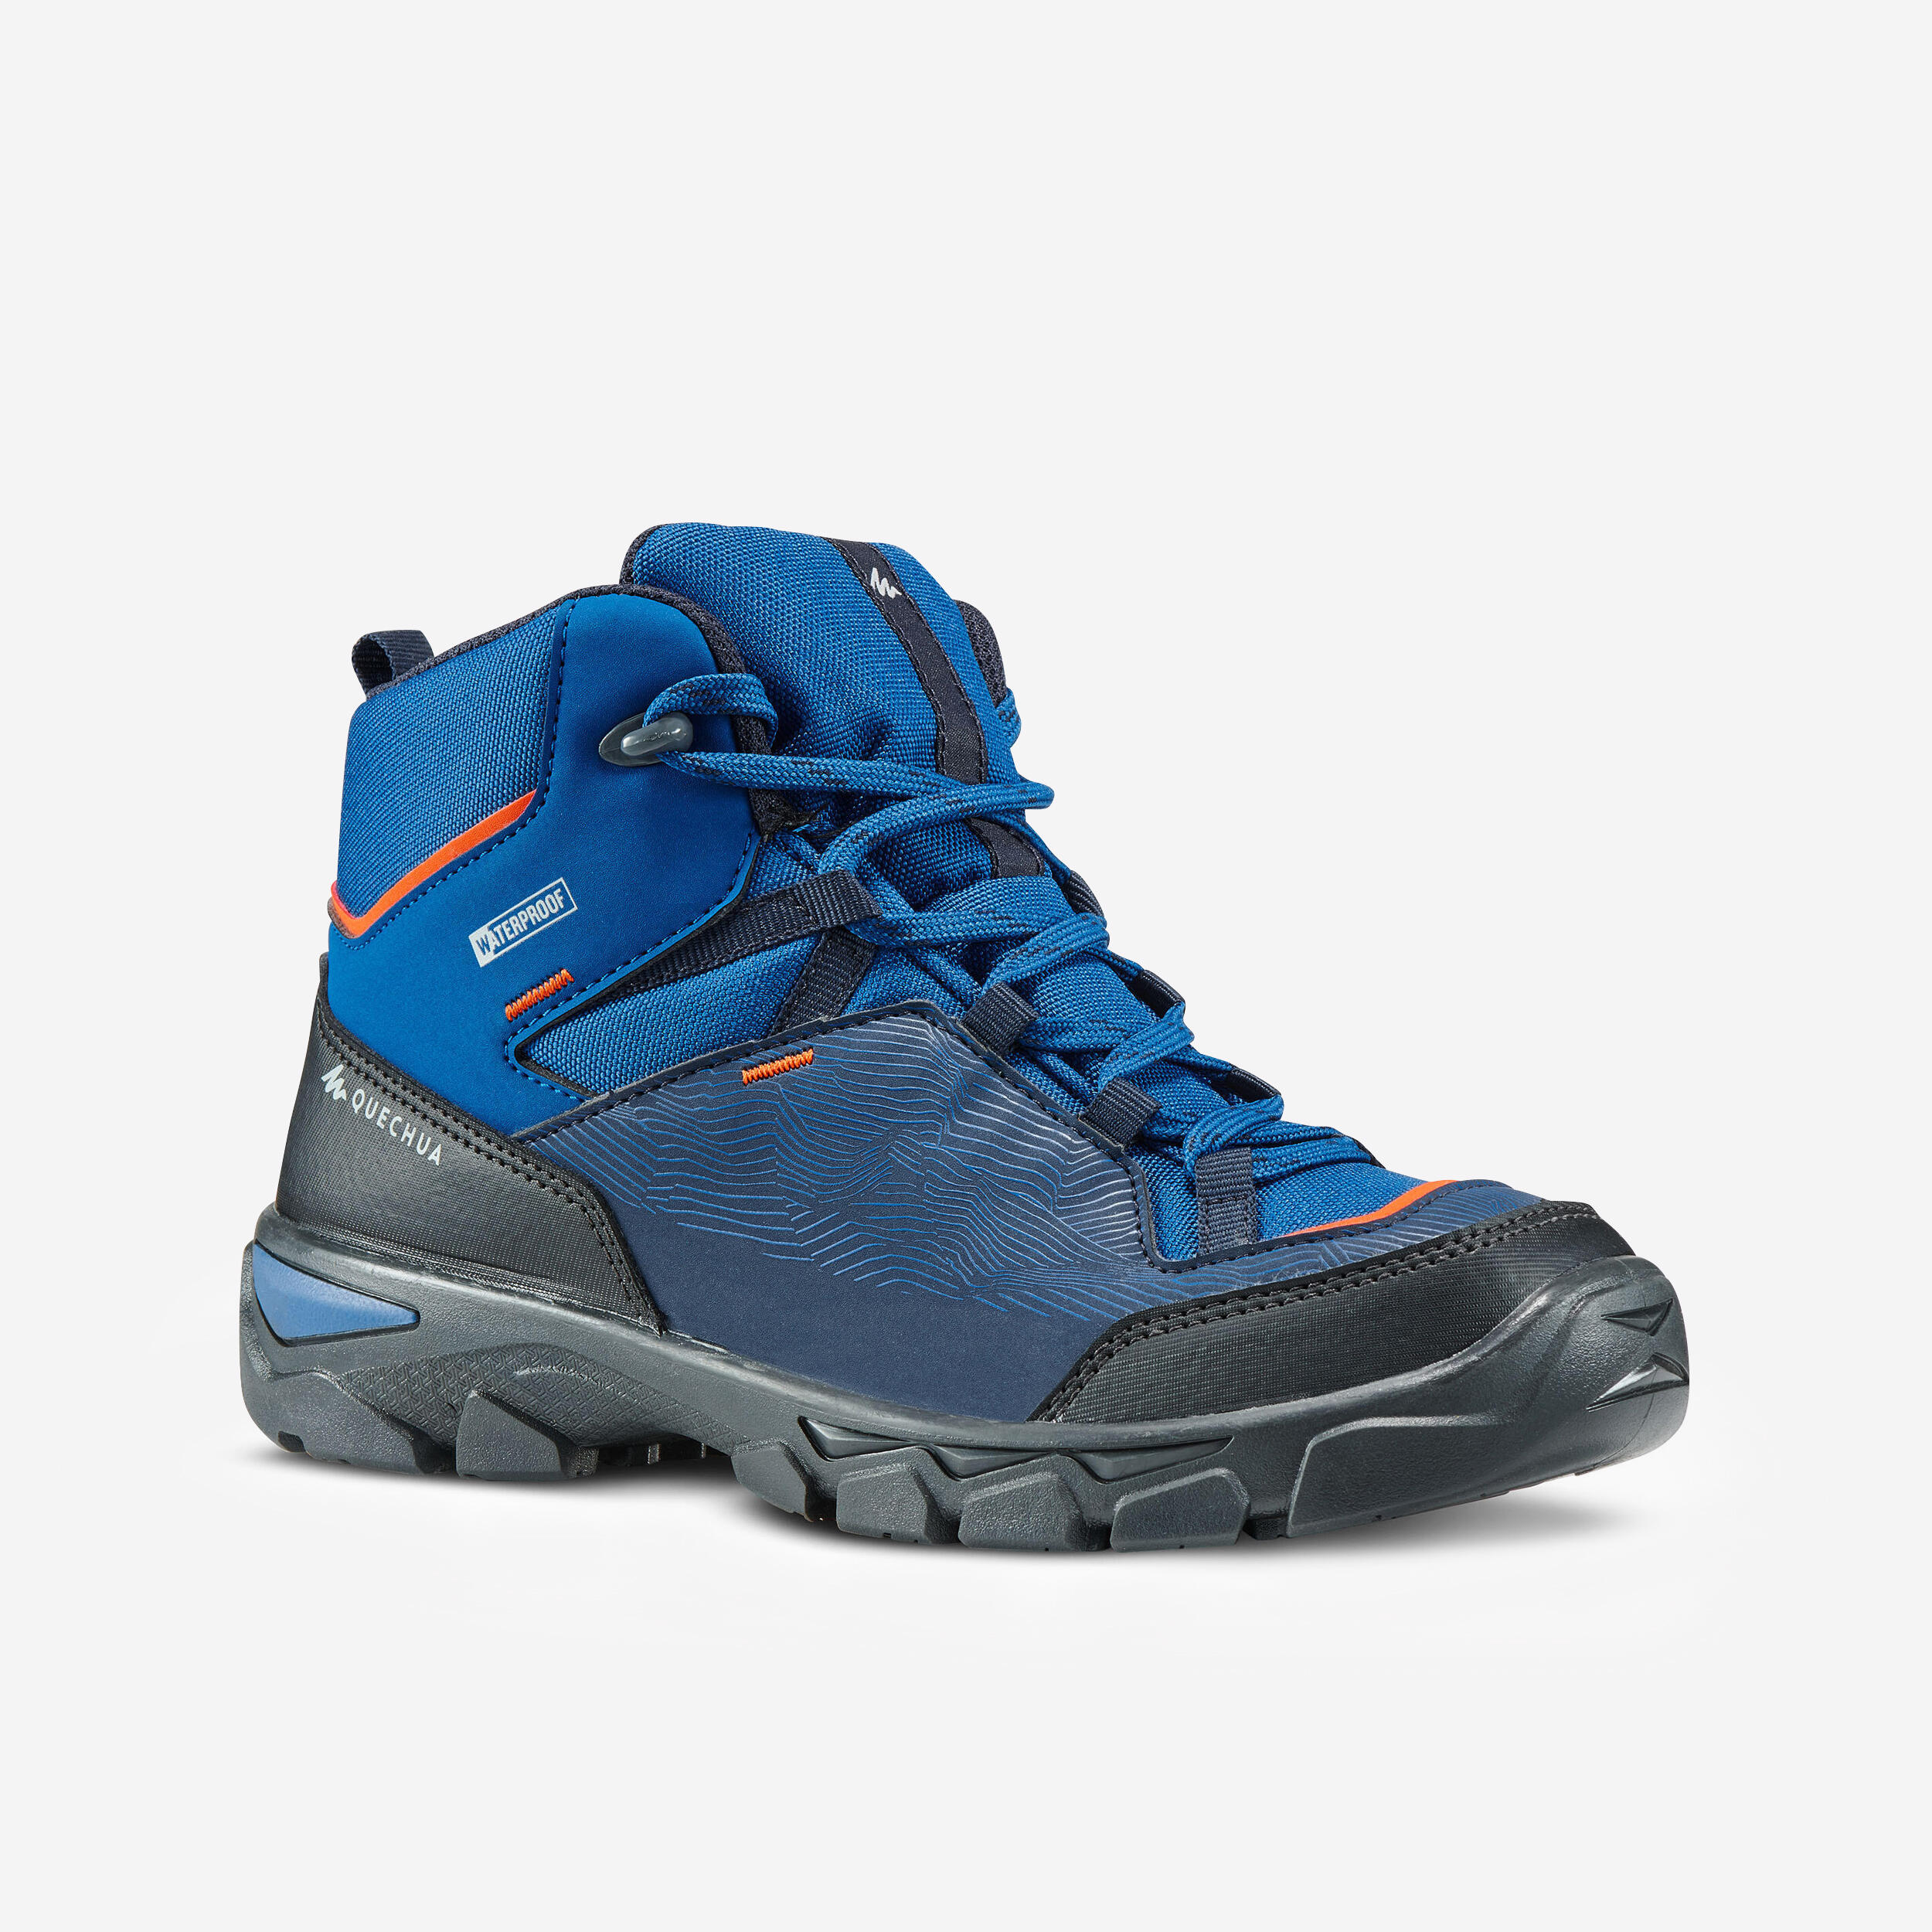 QUECHUA Chidren's waterproof walking shoes - MH120 MID blue - size 3-5